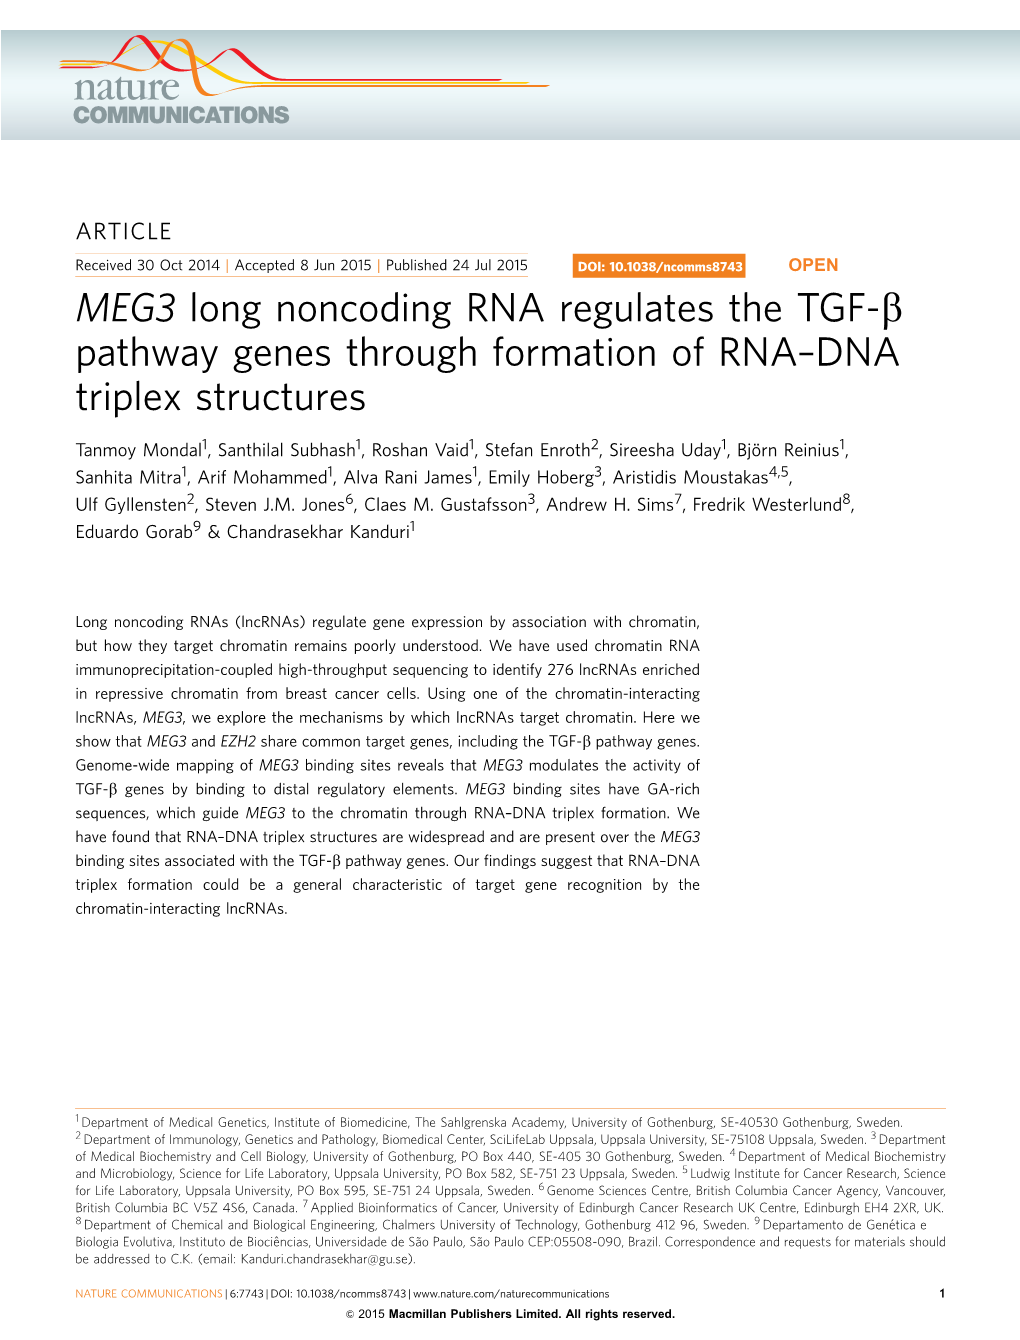 MEG3 Long Noncoding RNA Regulates the TGF-&Beta